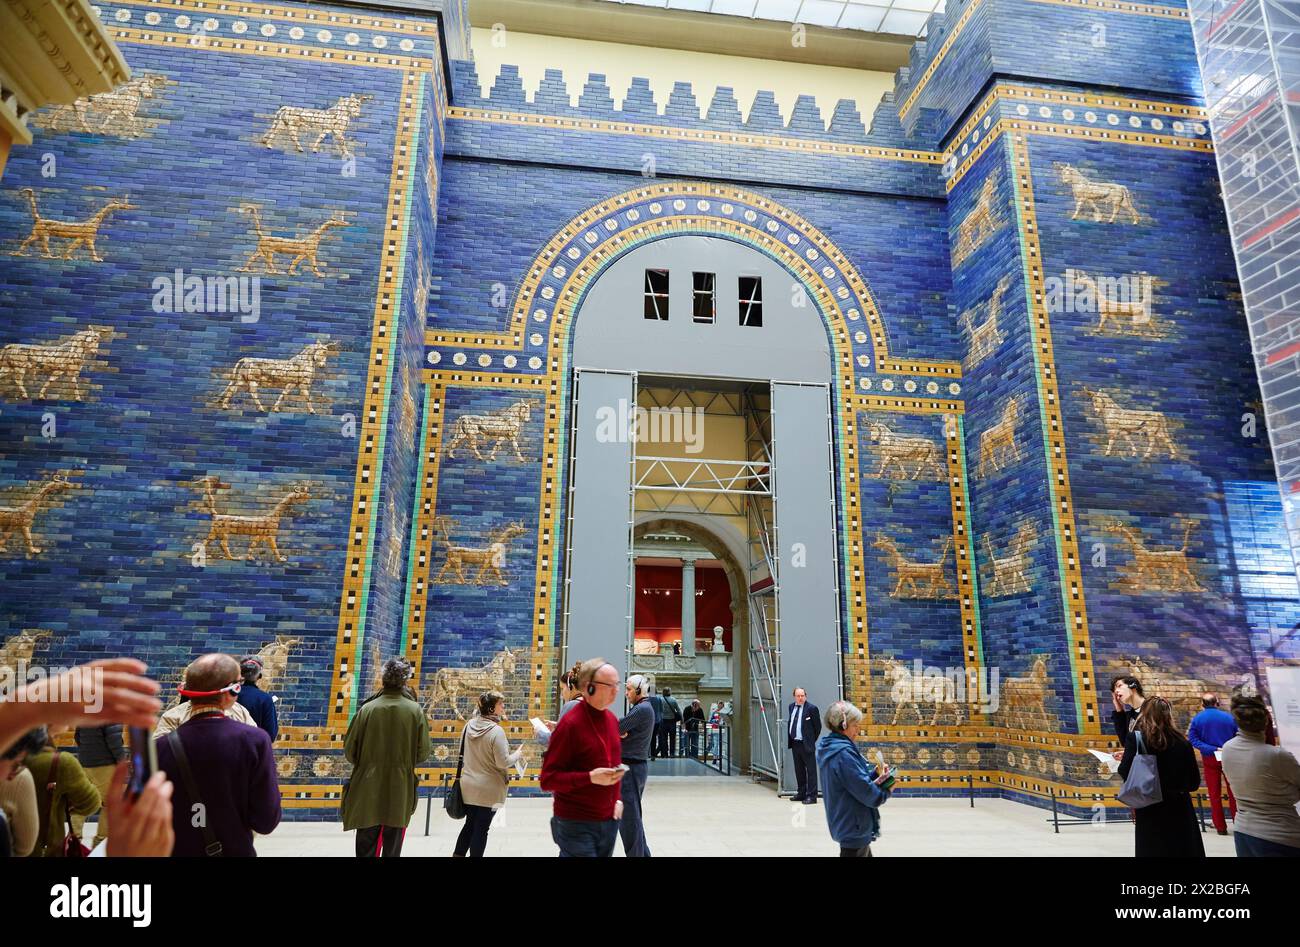 Ishtar Gate of the ancient city of Babylon, Pergamon Museum, Berlin, Germany. Stock Photo